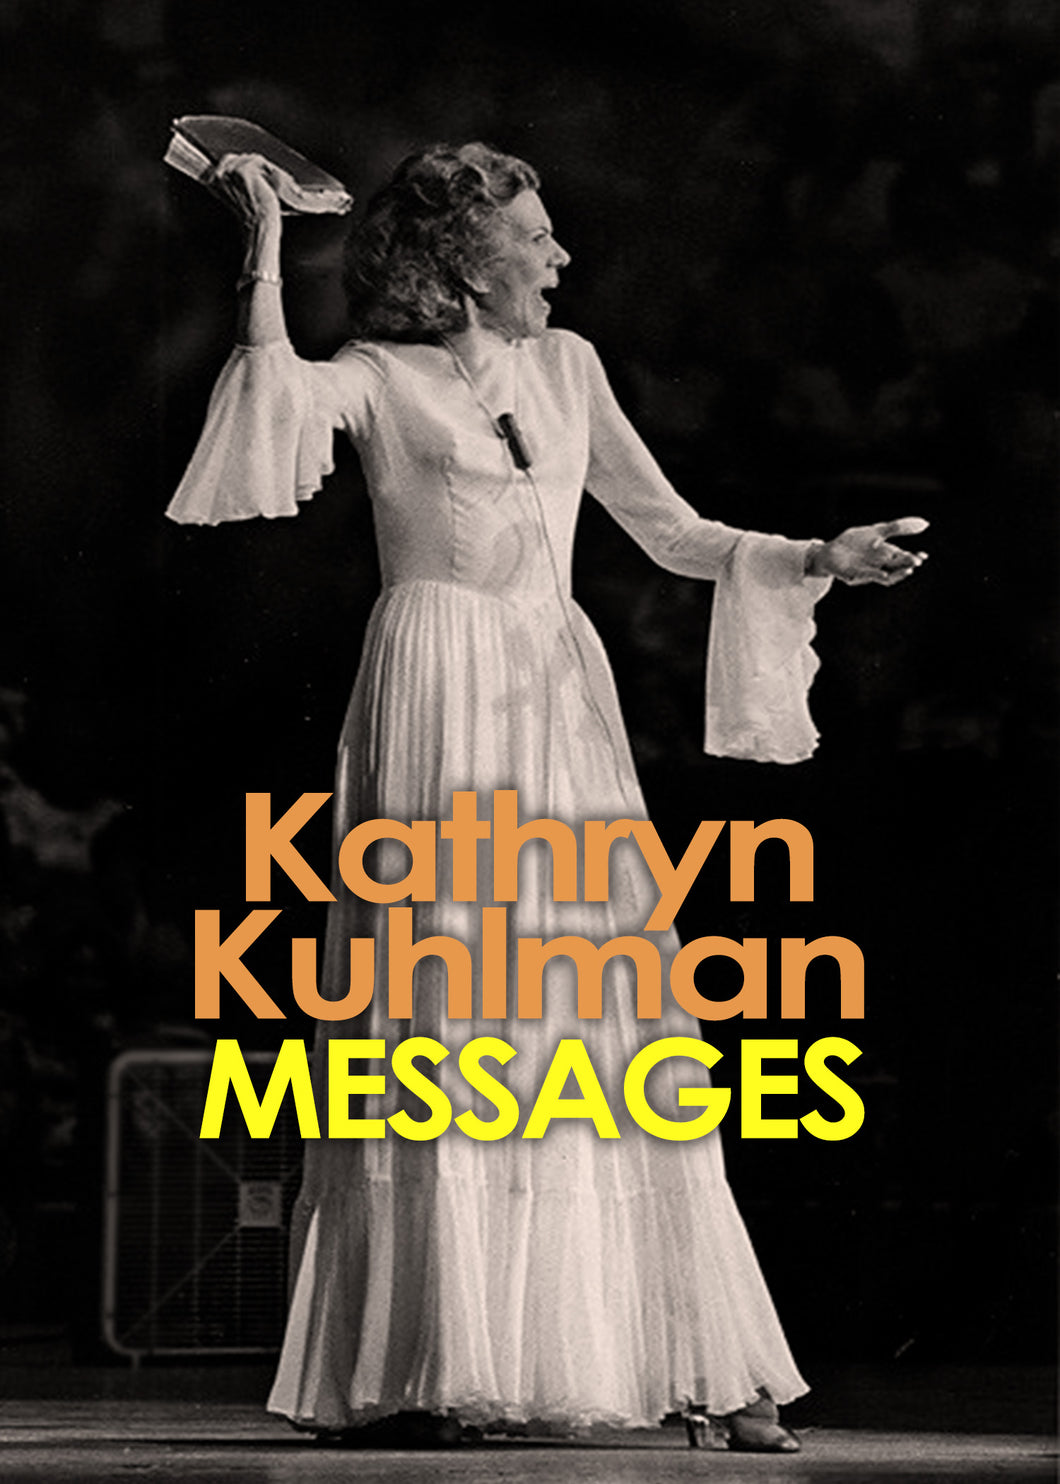 Kathryn Kuhlman Messages